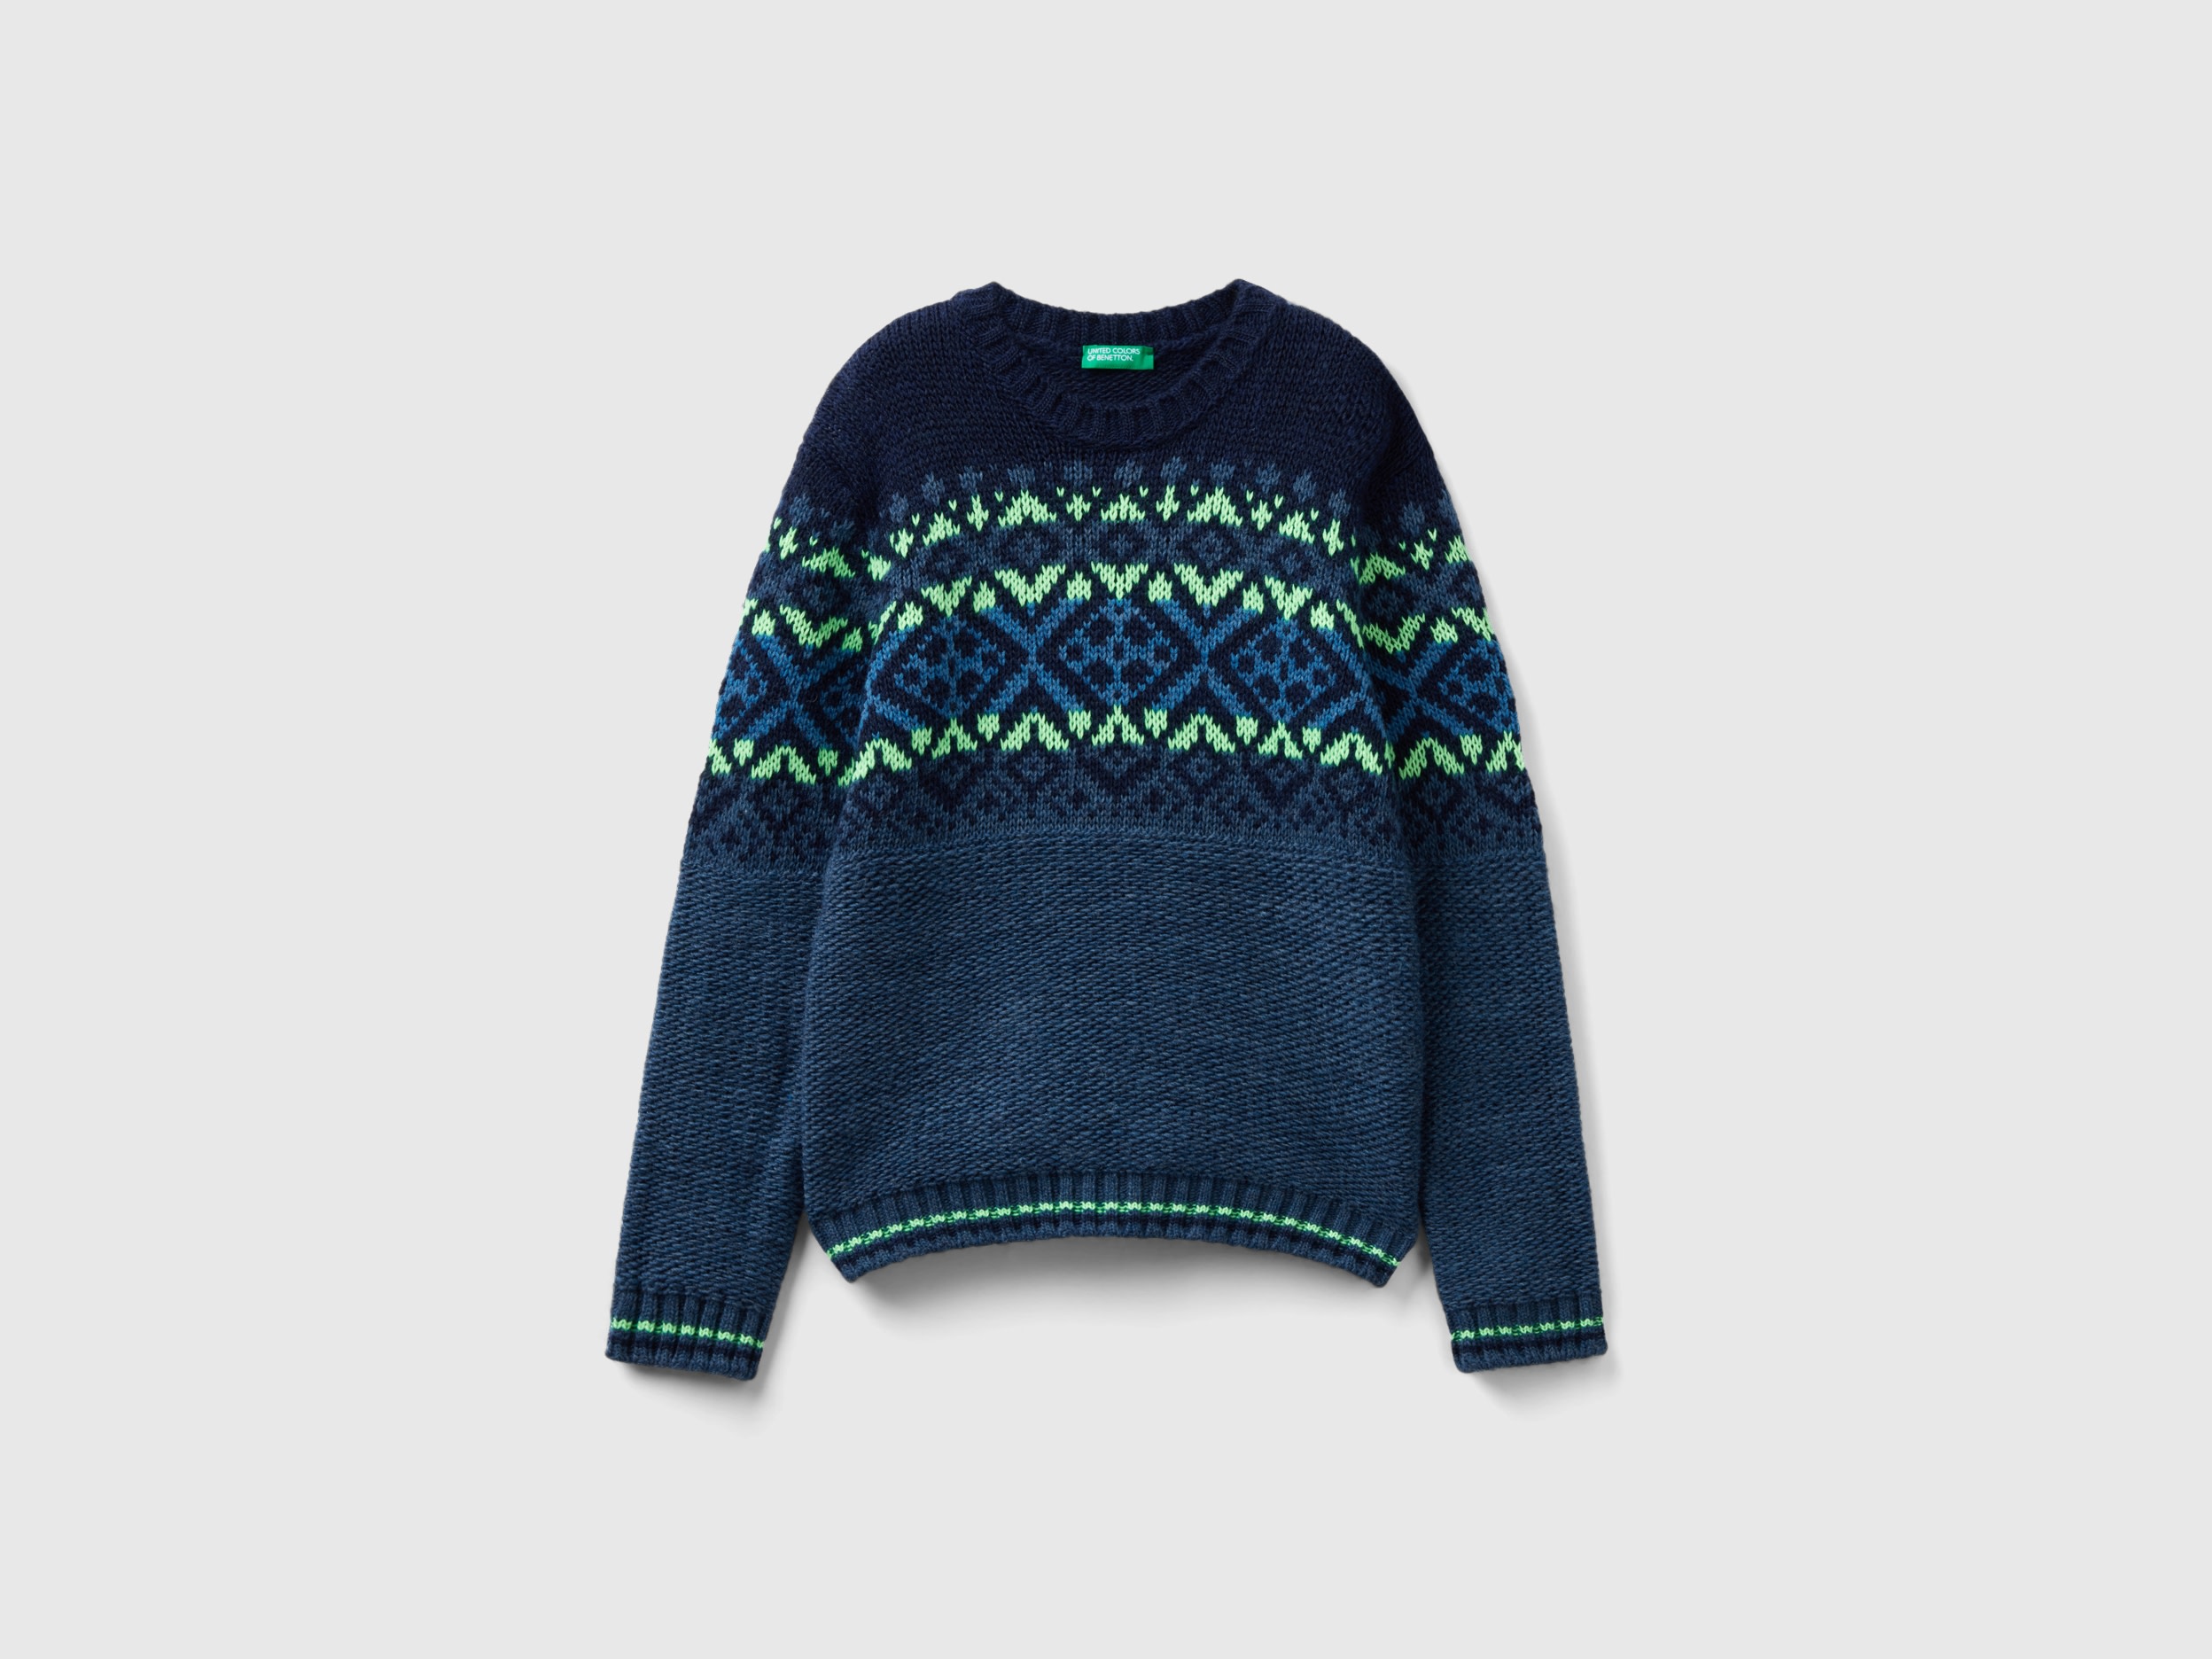 Benetton, Jacquard Sweater With Neon Details, size L, Multi-color, Kids